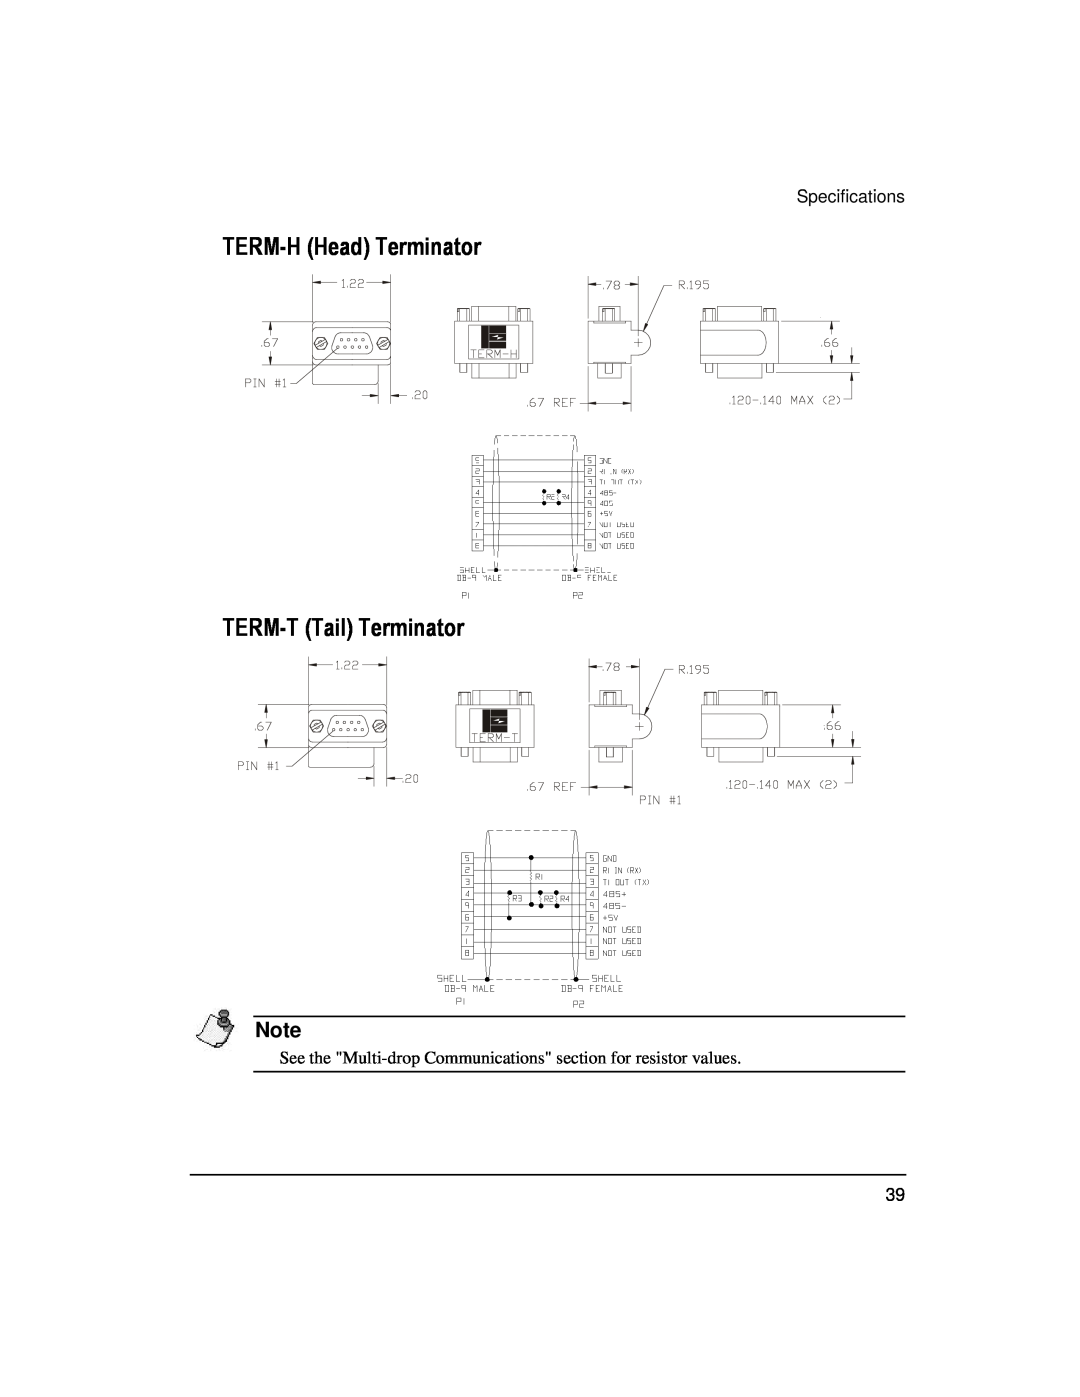 Emerson 400508-02 installation manual TERM-H Head Terminator TERM-T Tail Terminator, Specifications 